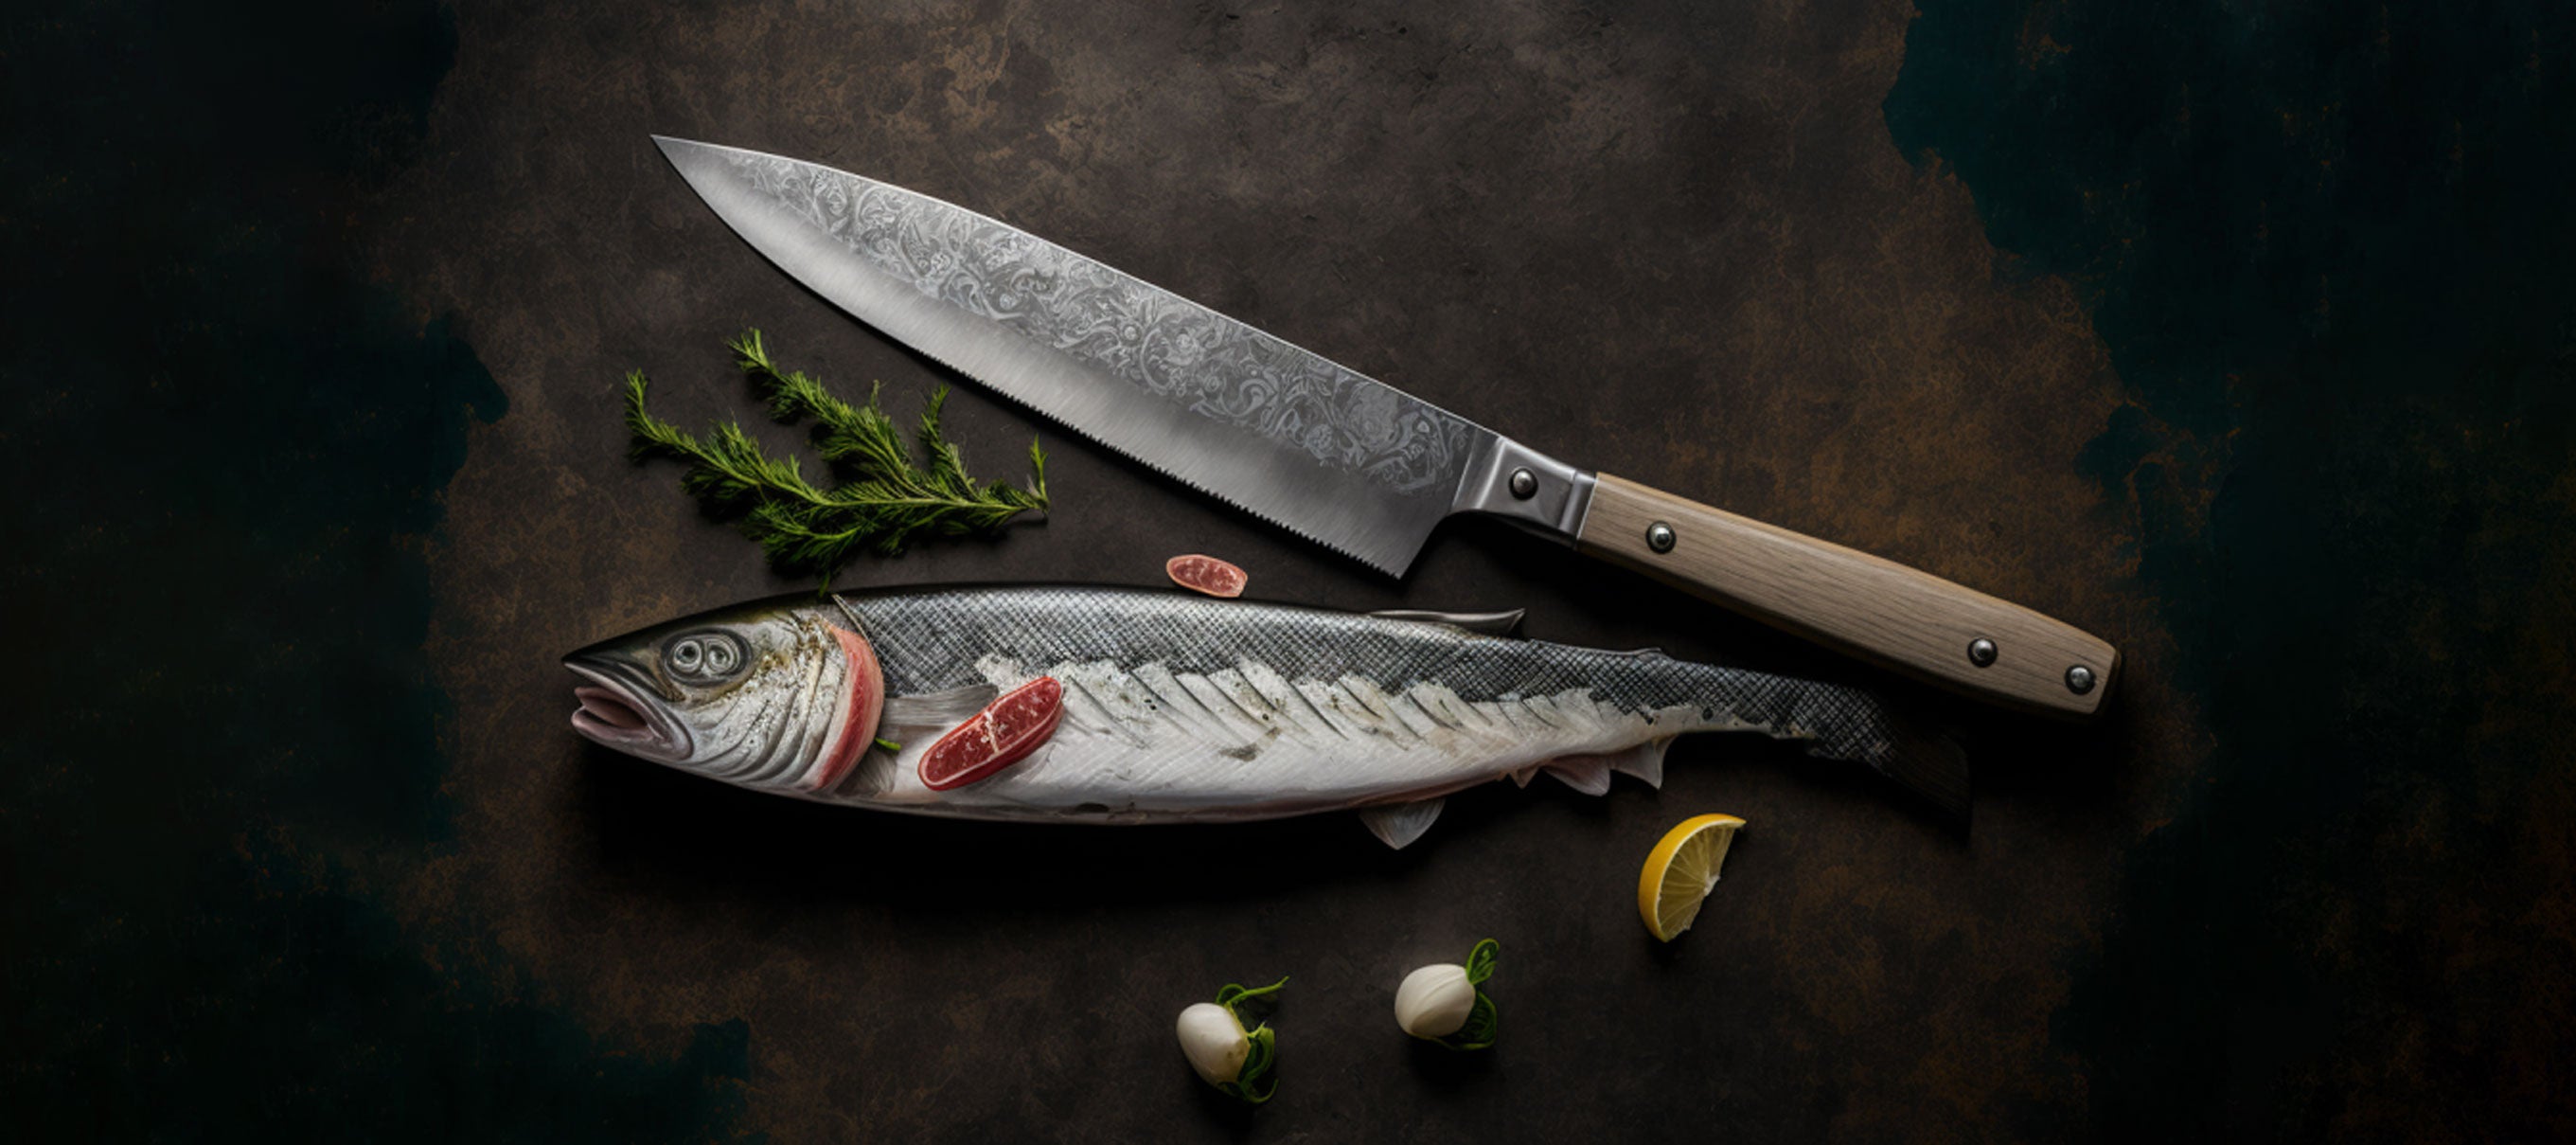 Kitchen Knife Slicing Knife Kitchen Cutting Knife Fish Head Knife